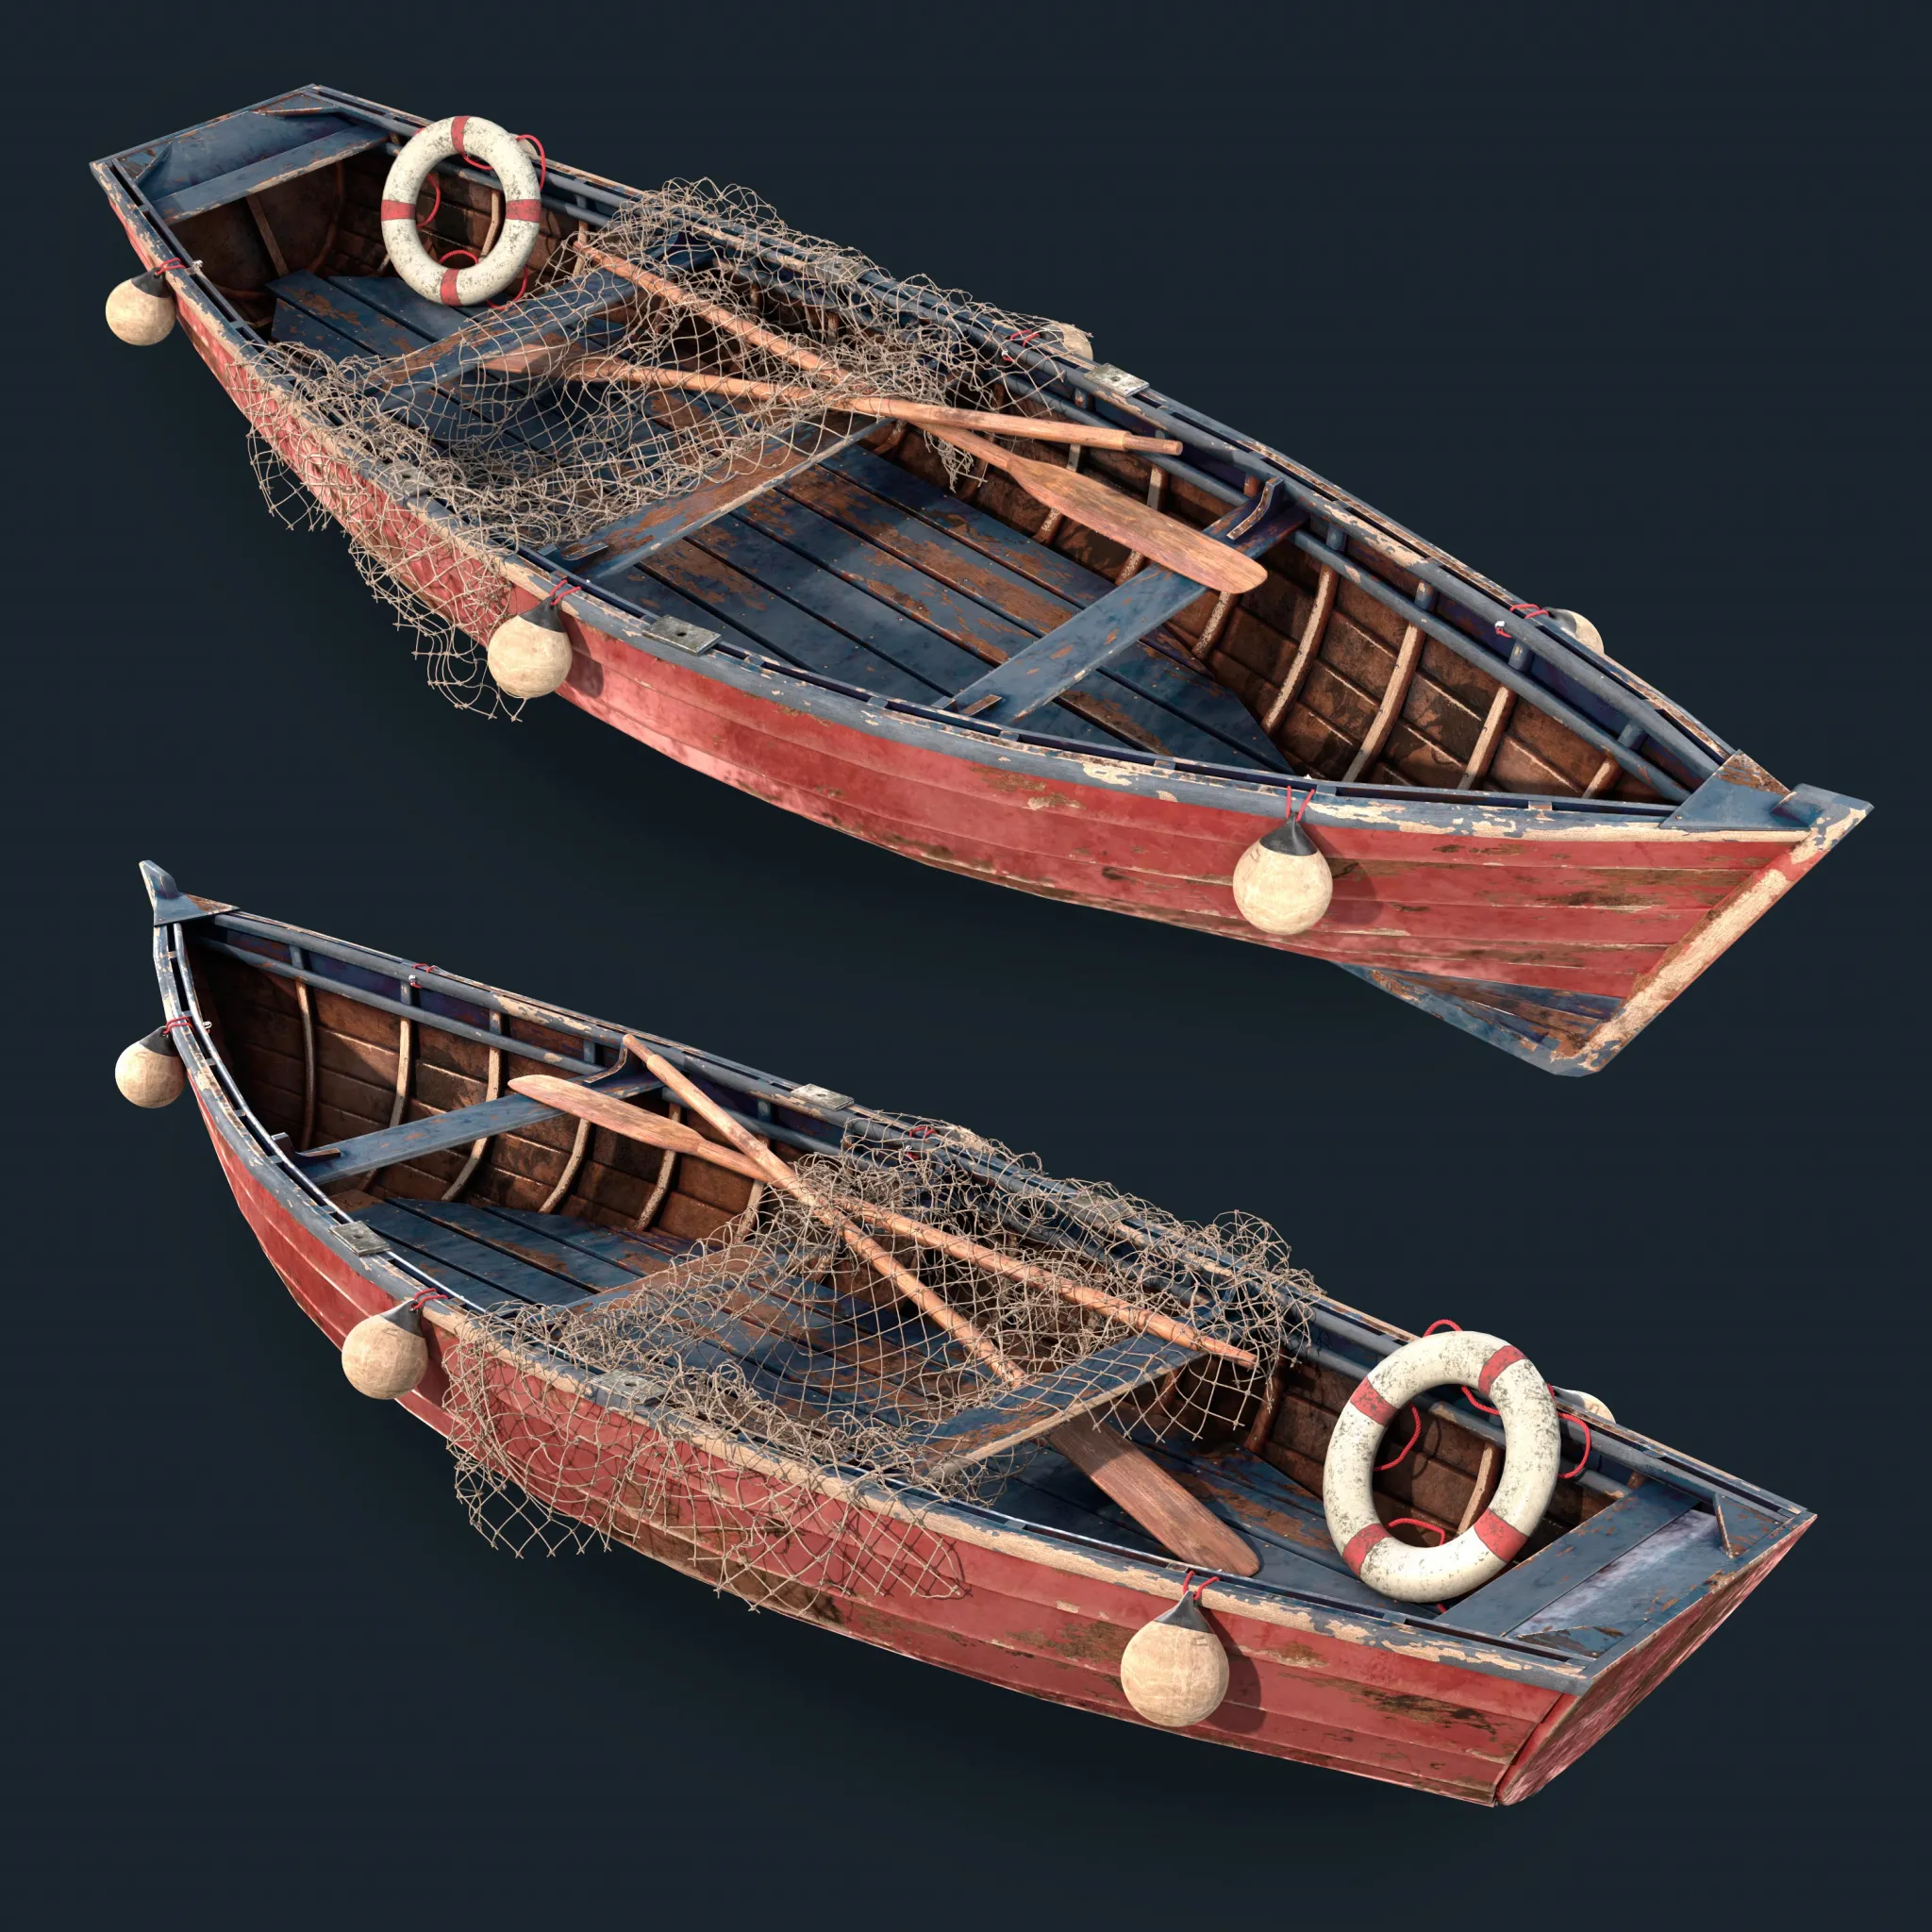 old fishing boat – 221525